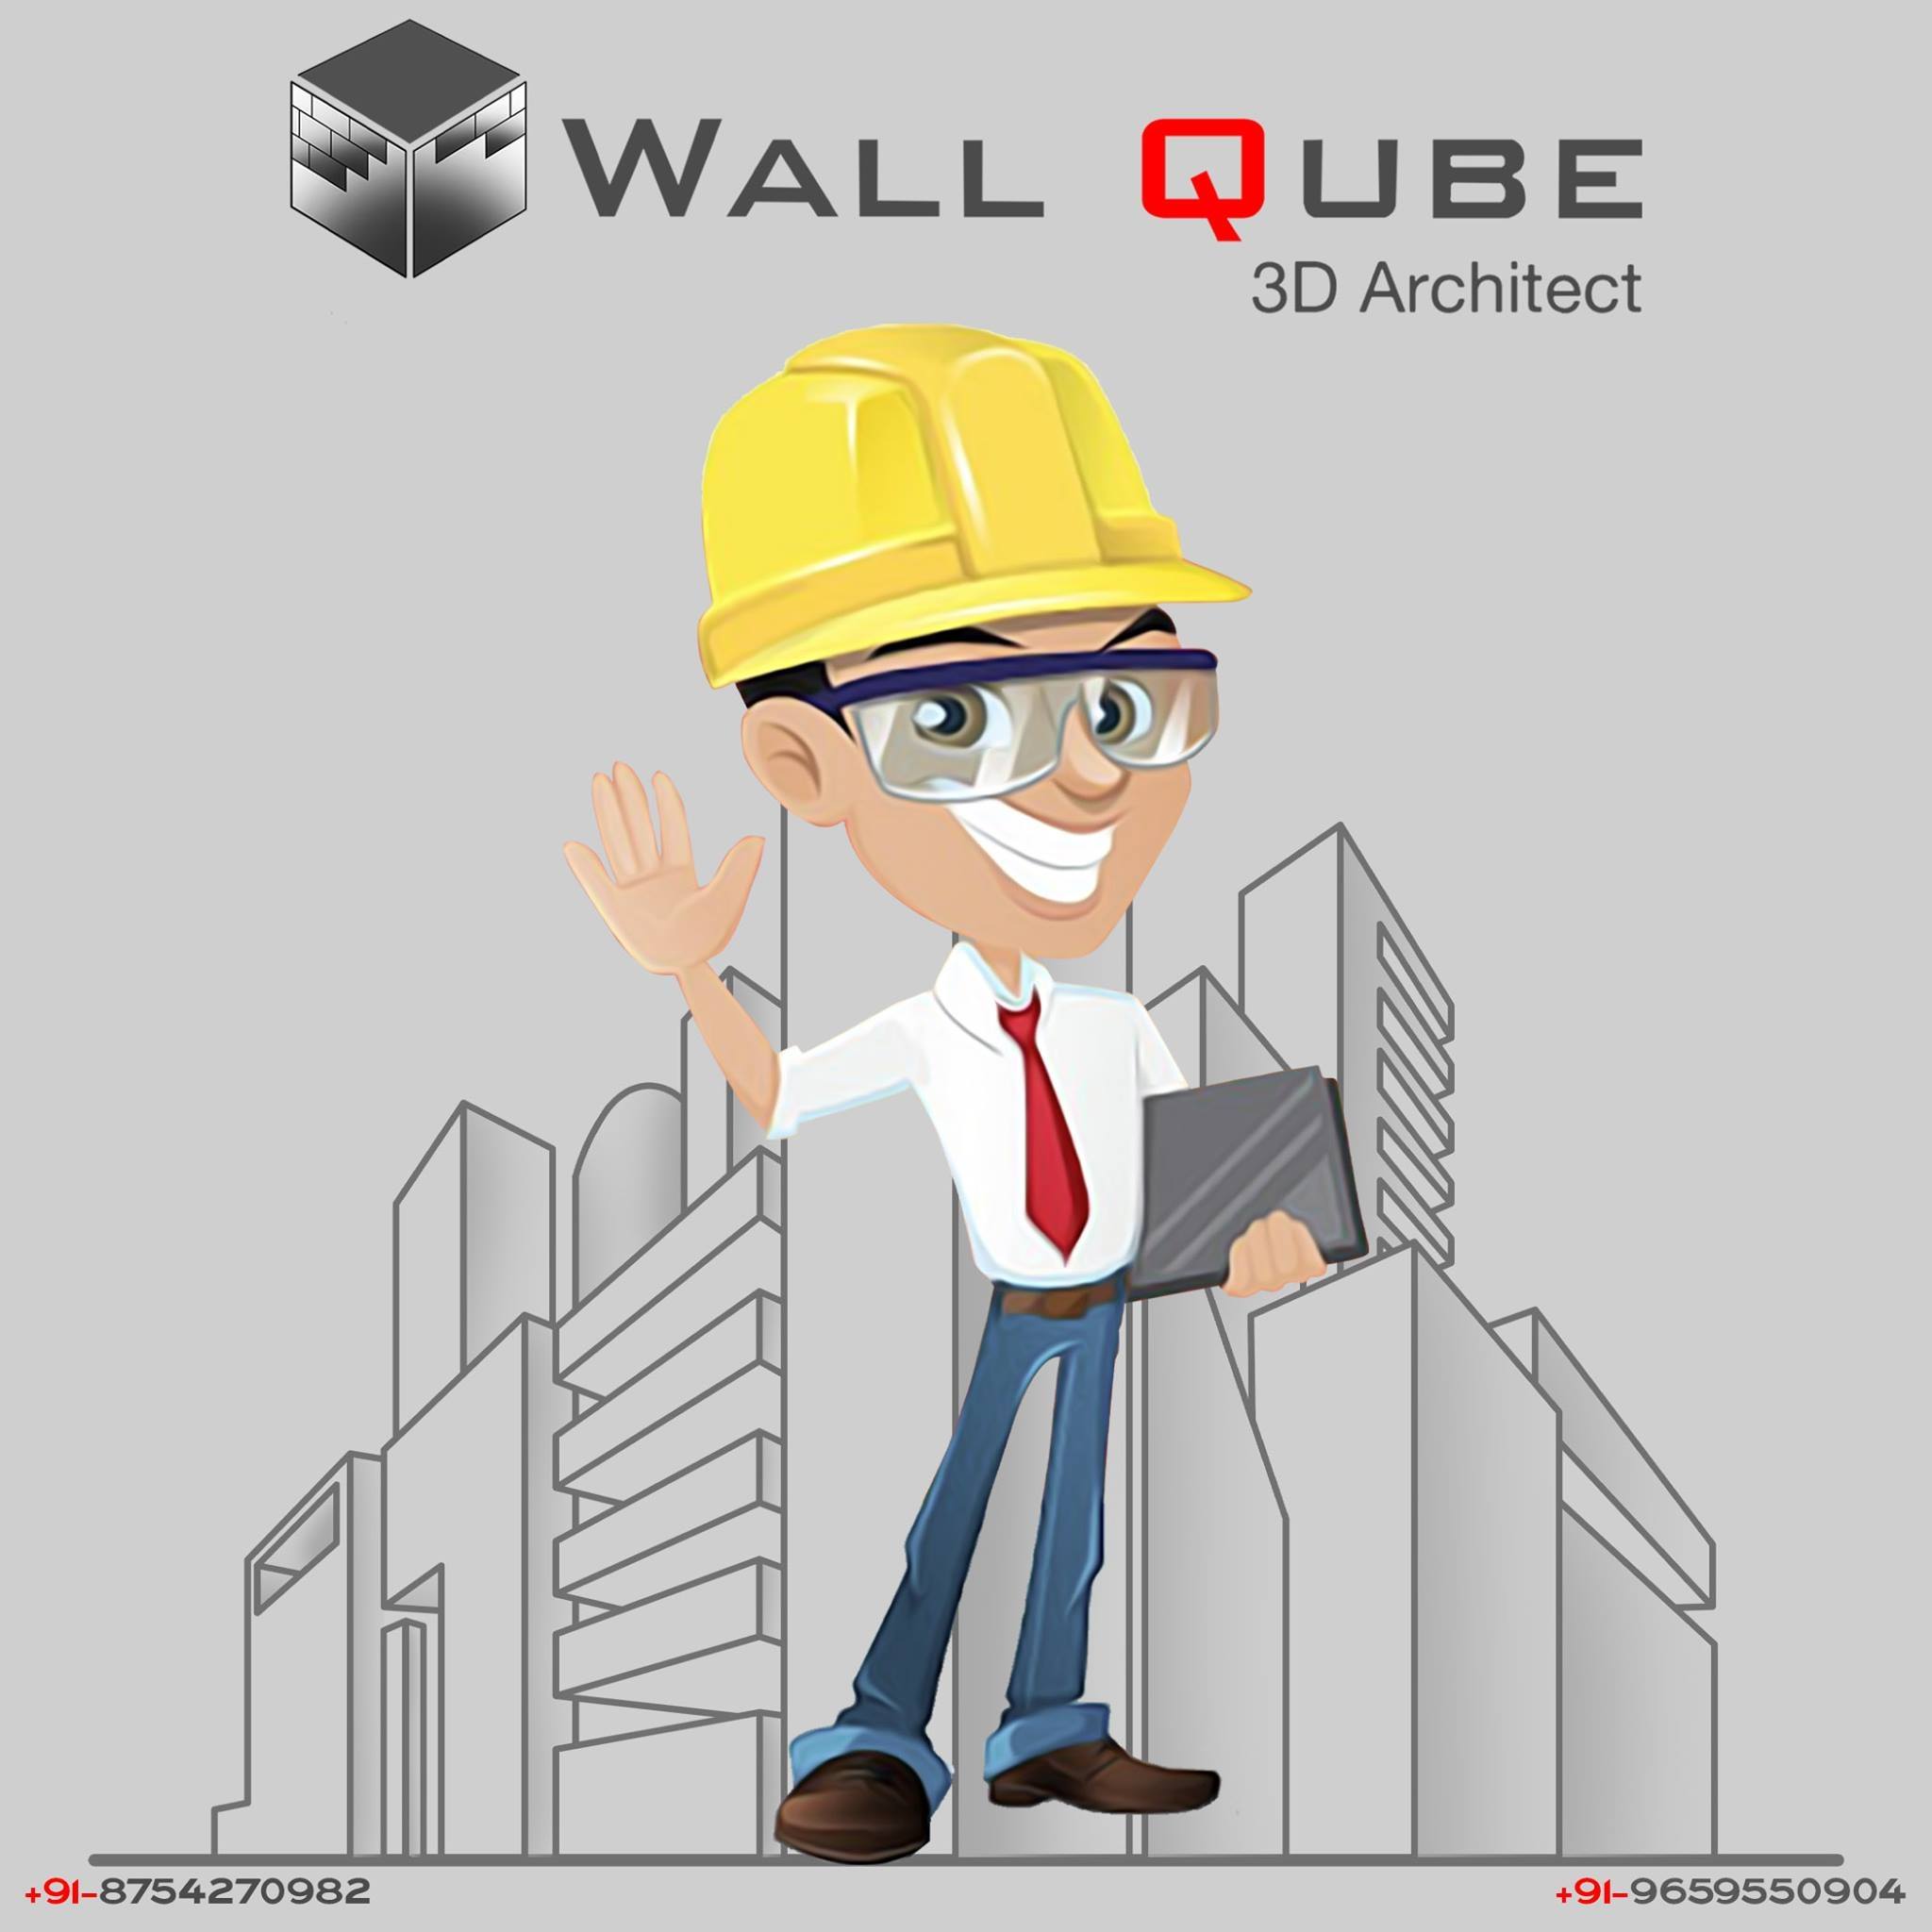 Wall Qube Architect|Architect|Professional Services